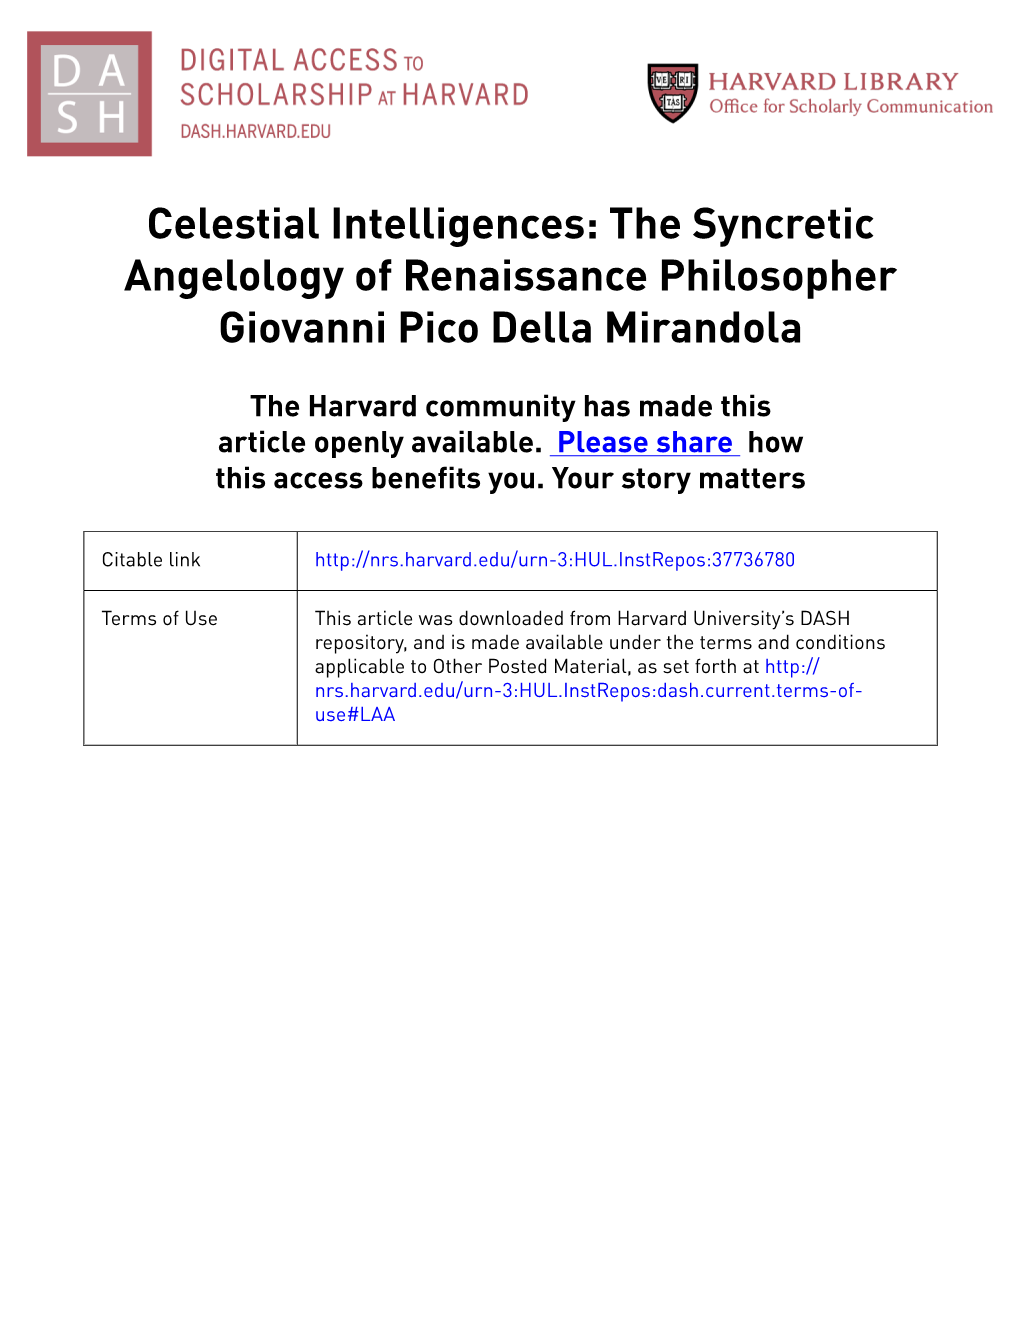 The Syncretic Angelology of Renaissance Philosopher Giovanni Pico Della Mirandola